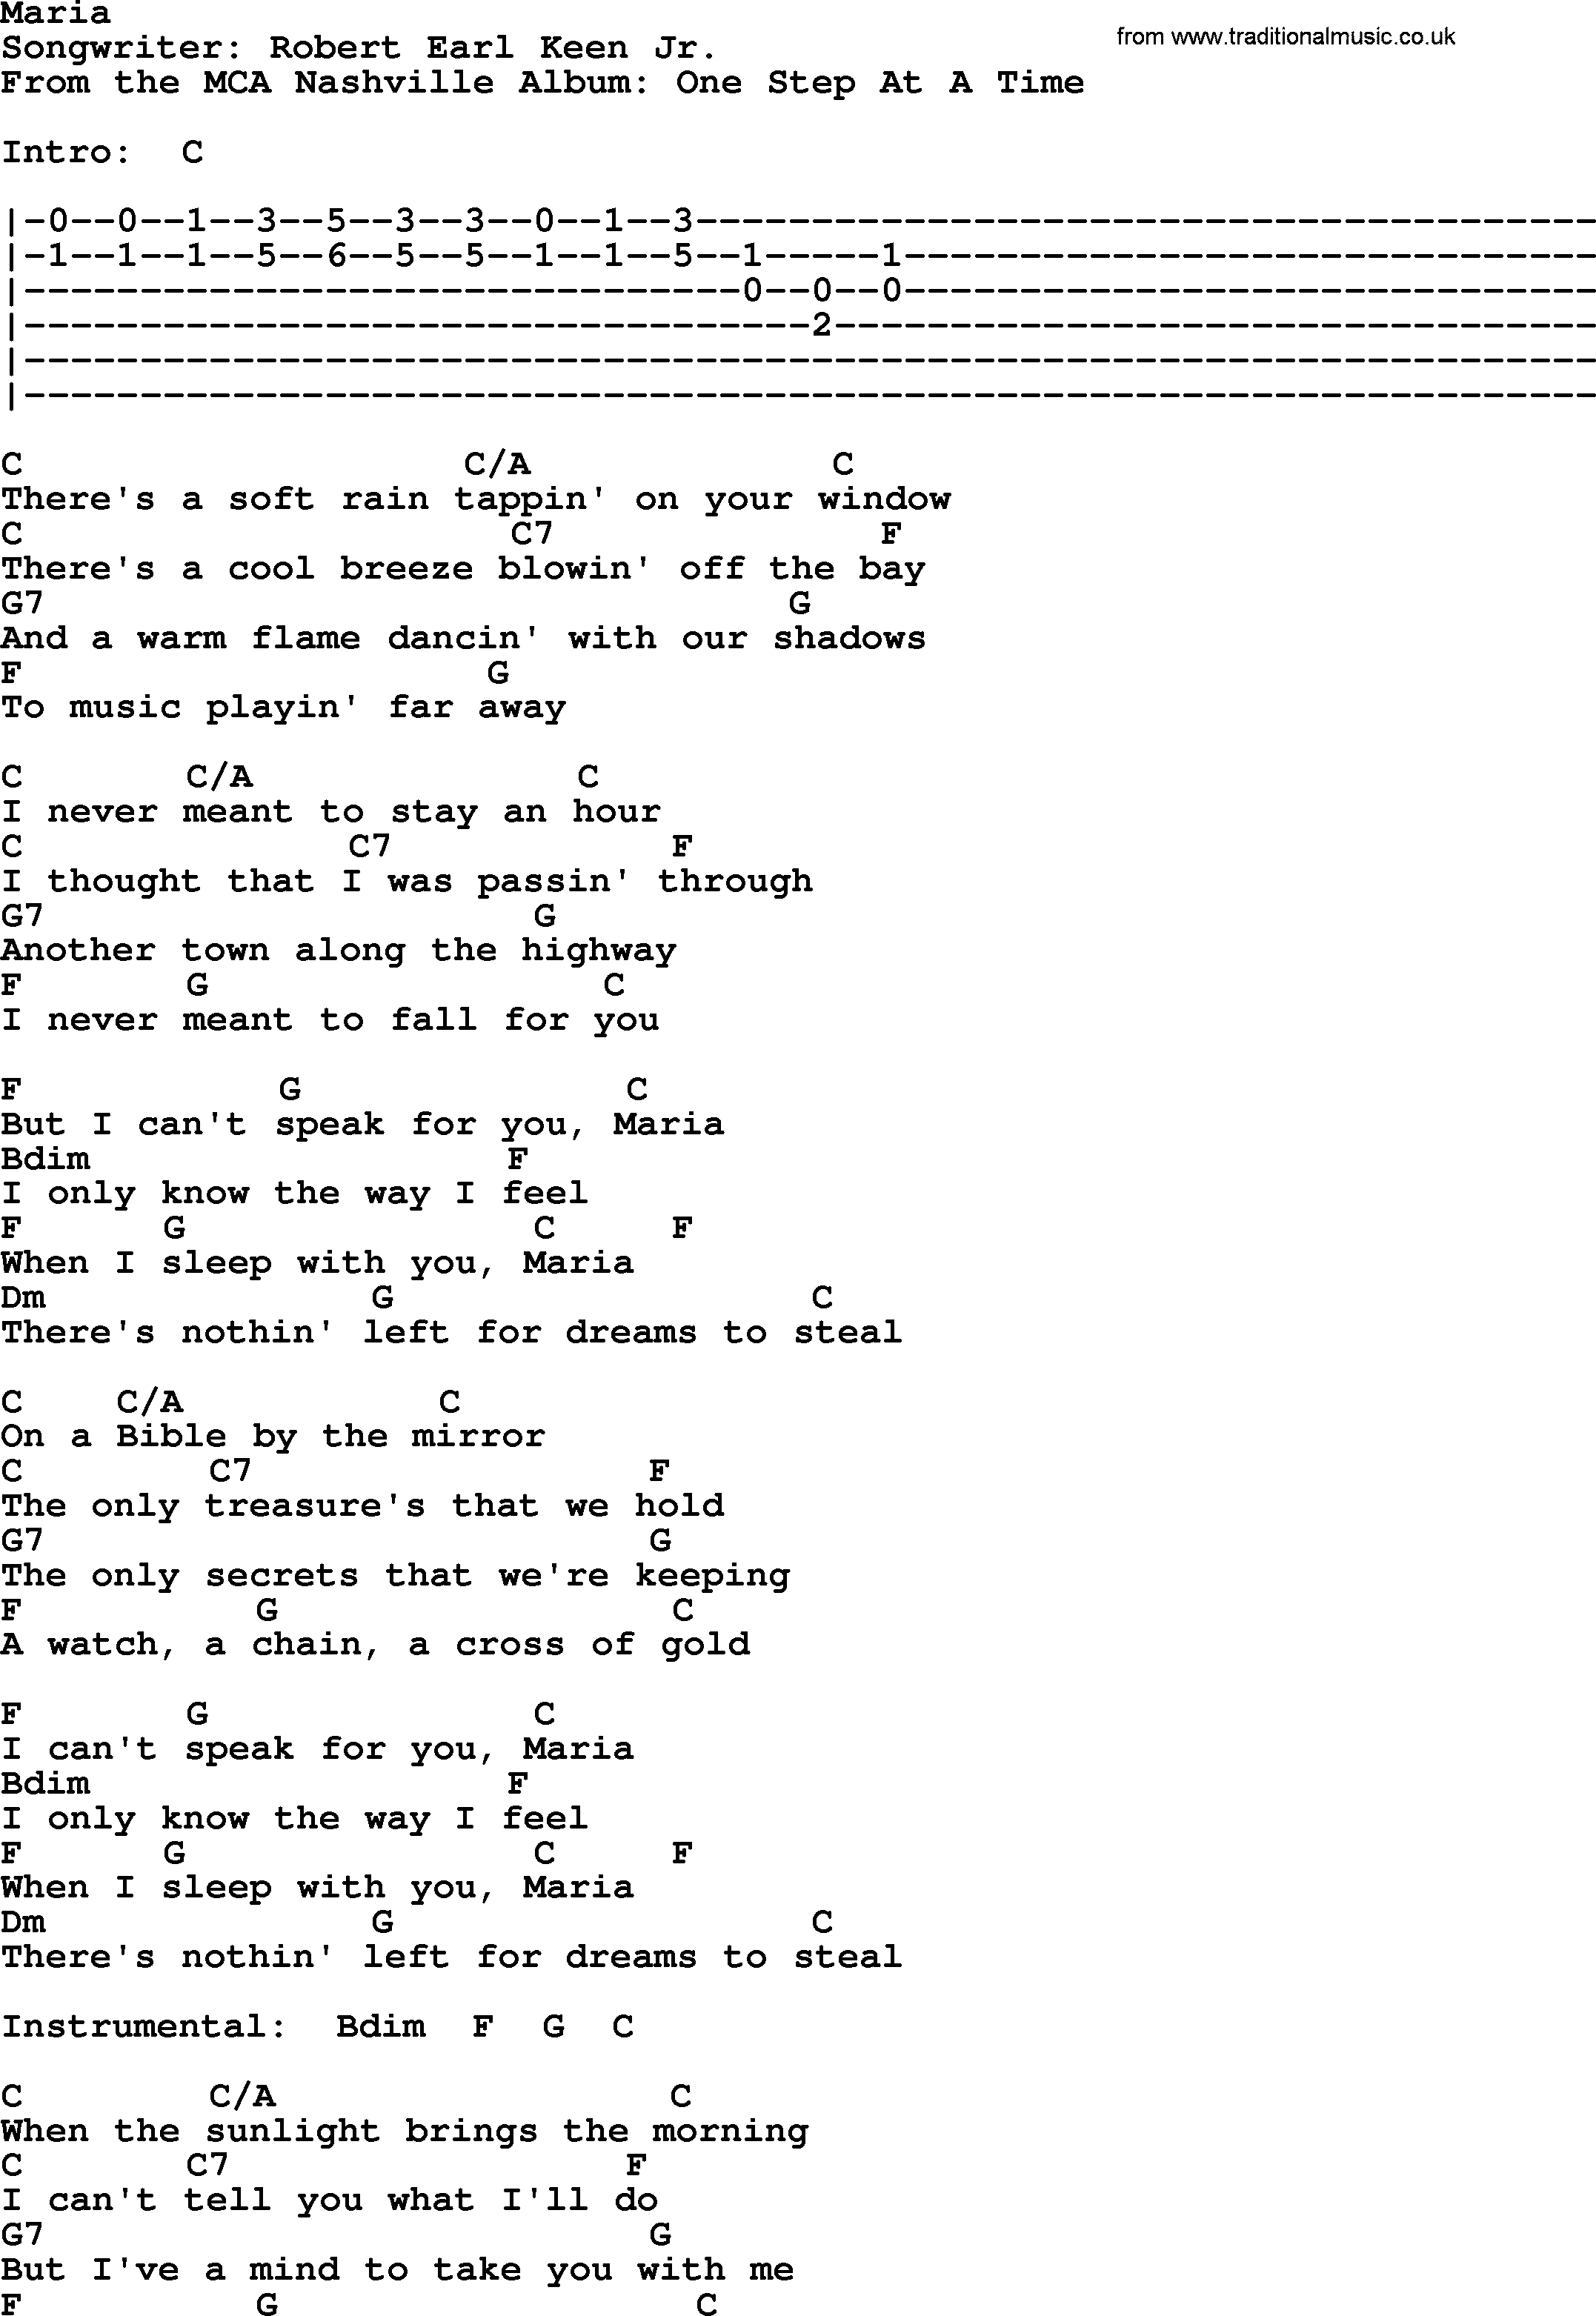 George Strait song: Maria, lyrics and chords